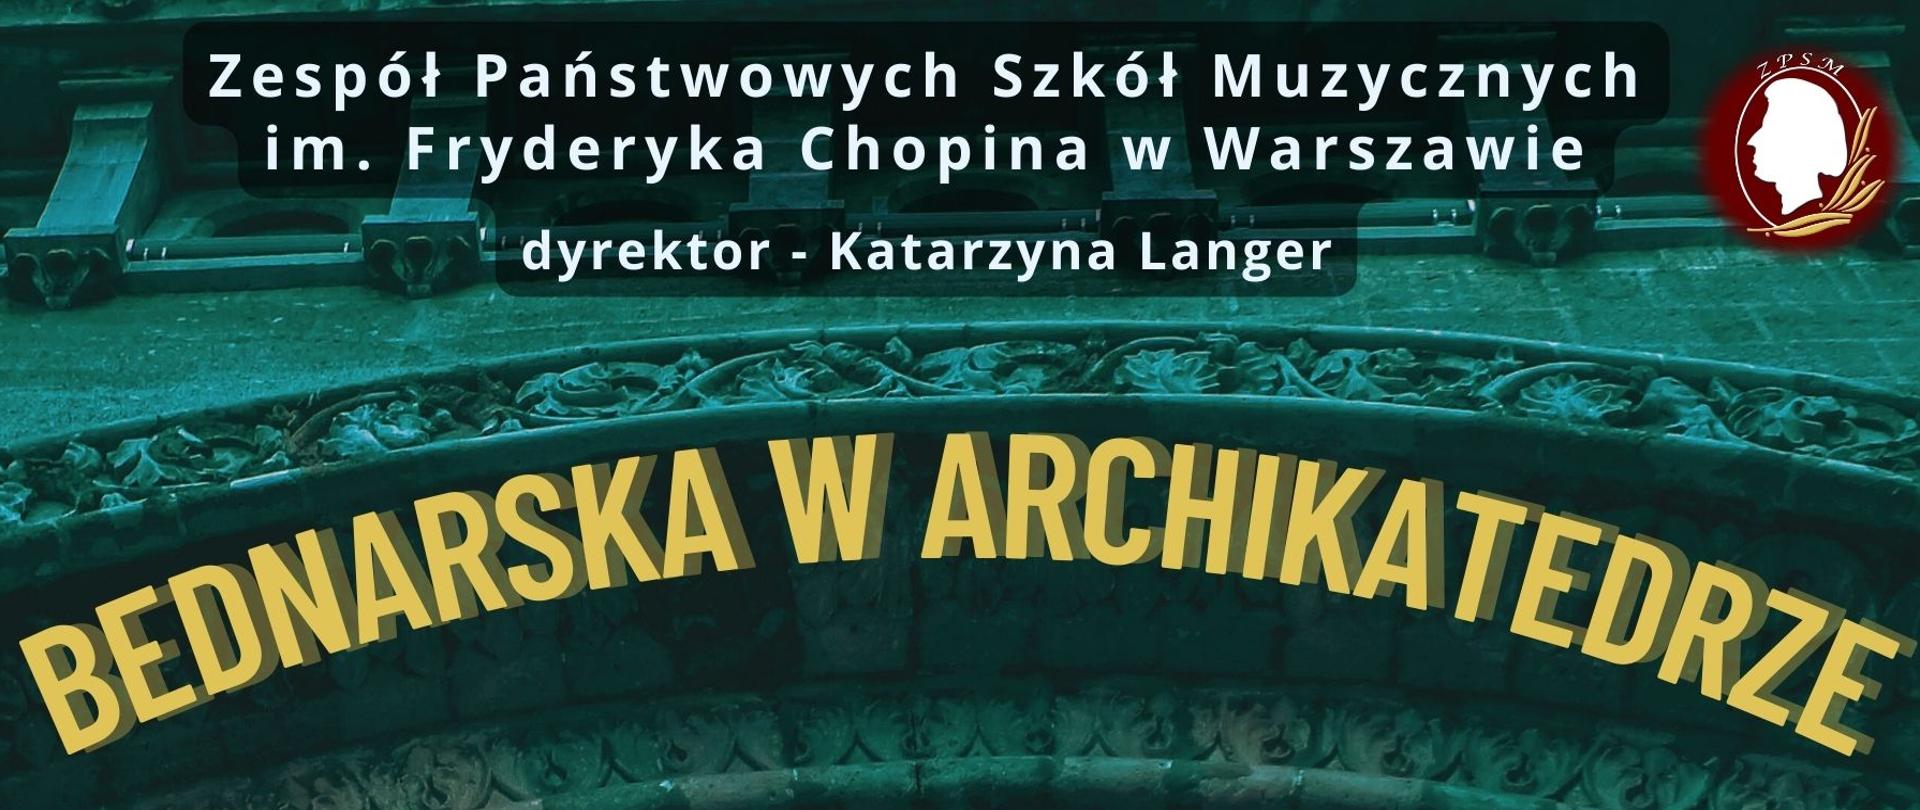 Afisz - Bednarska w Archikatedrze - koncert 21.05.2023 r. godz. 16.00